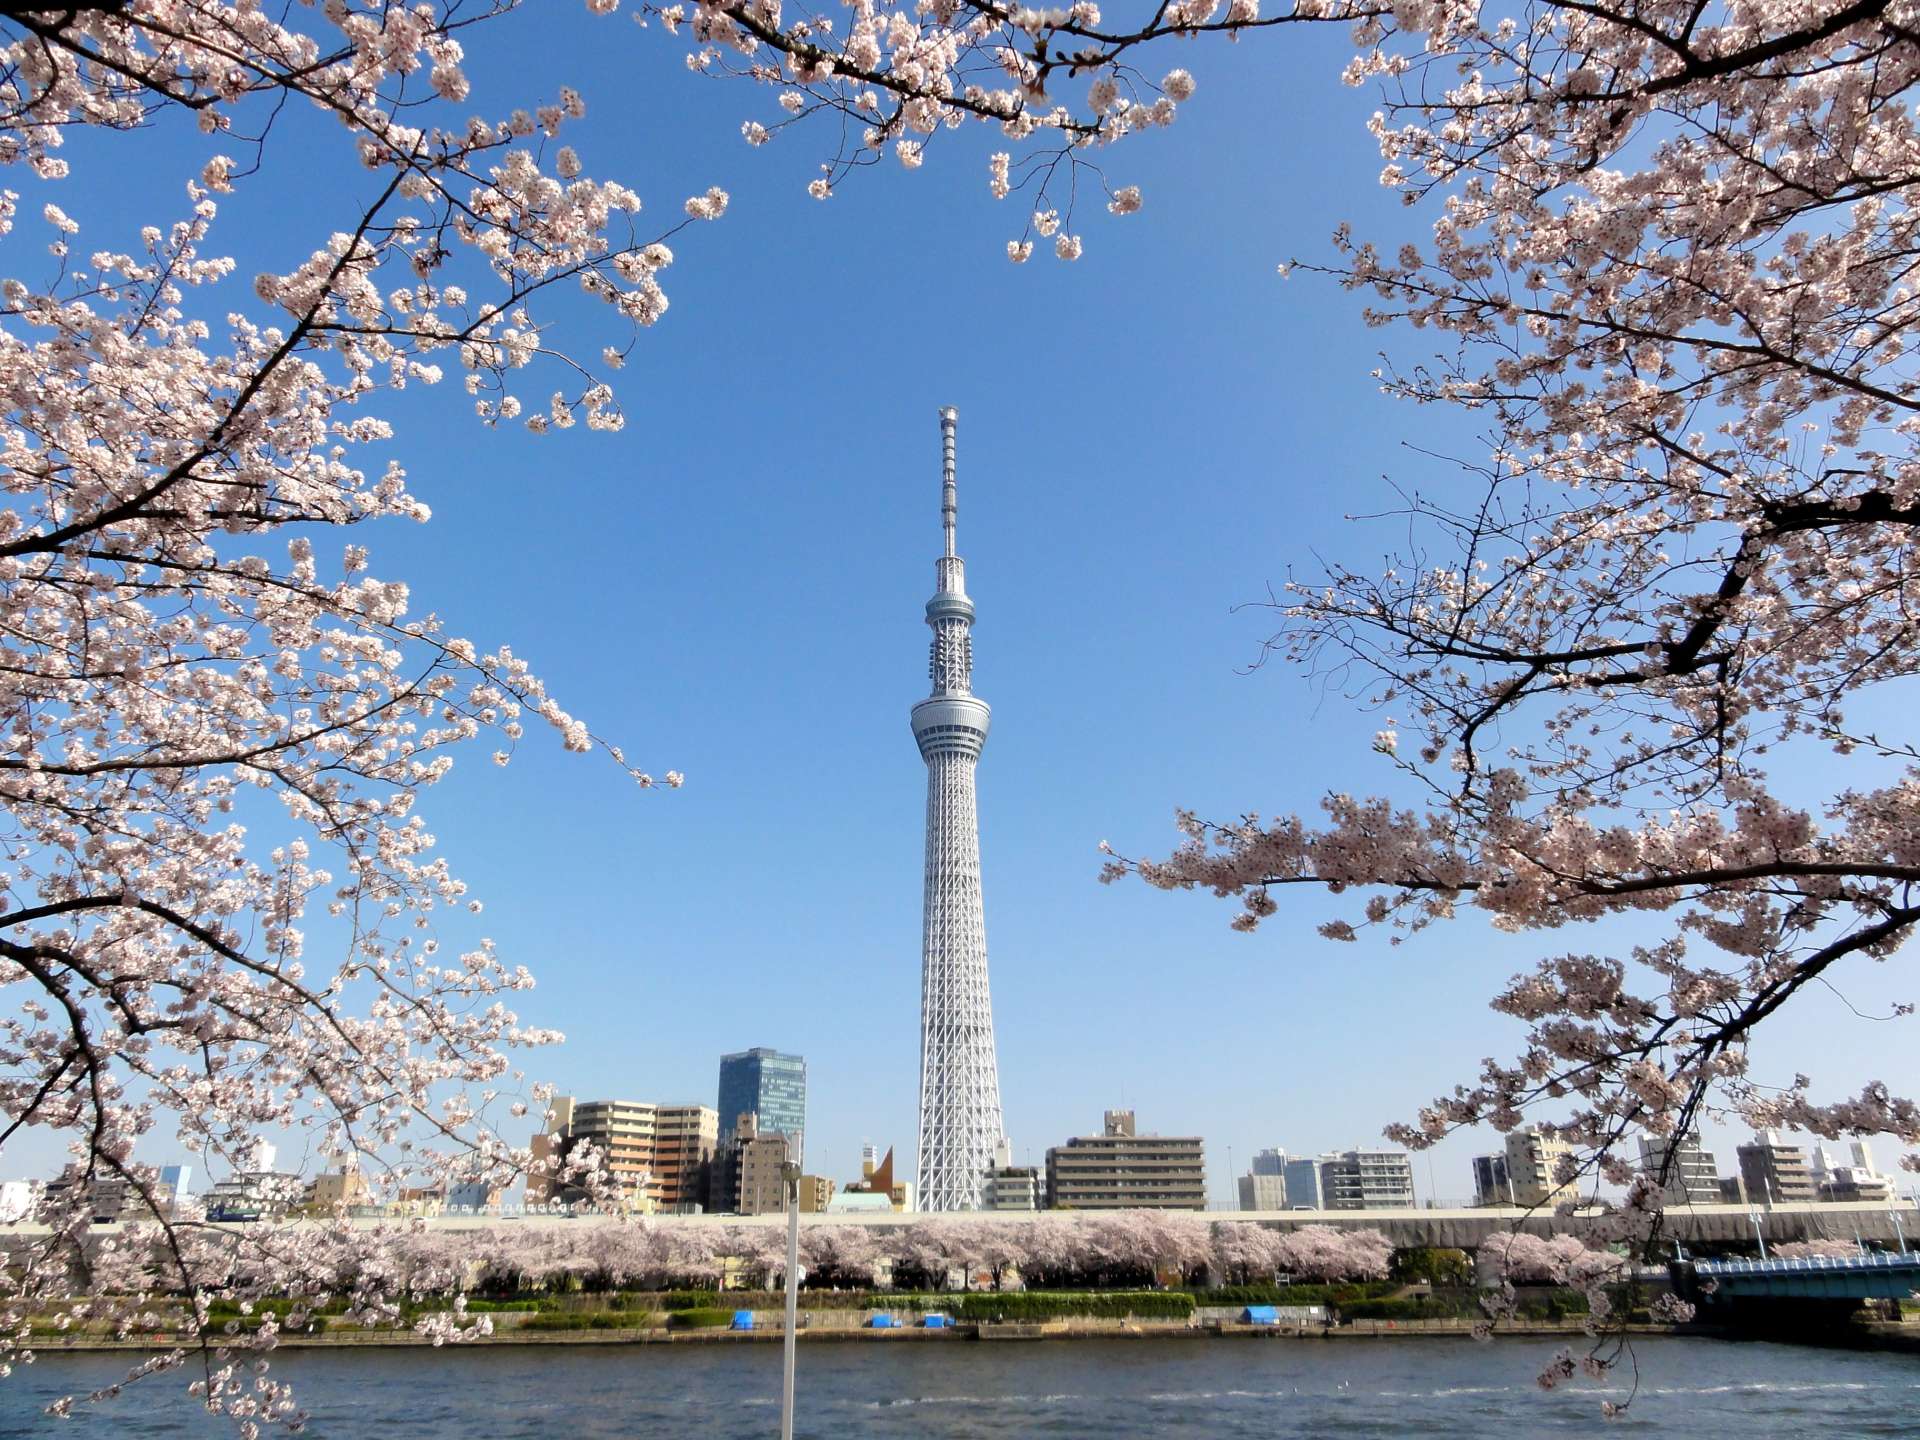 Tokyo・Asakusa Photo spots for cherry blossoms around Tokyo Skytree area. GOOD LUCK TRIP